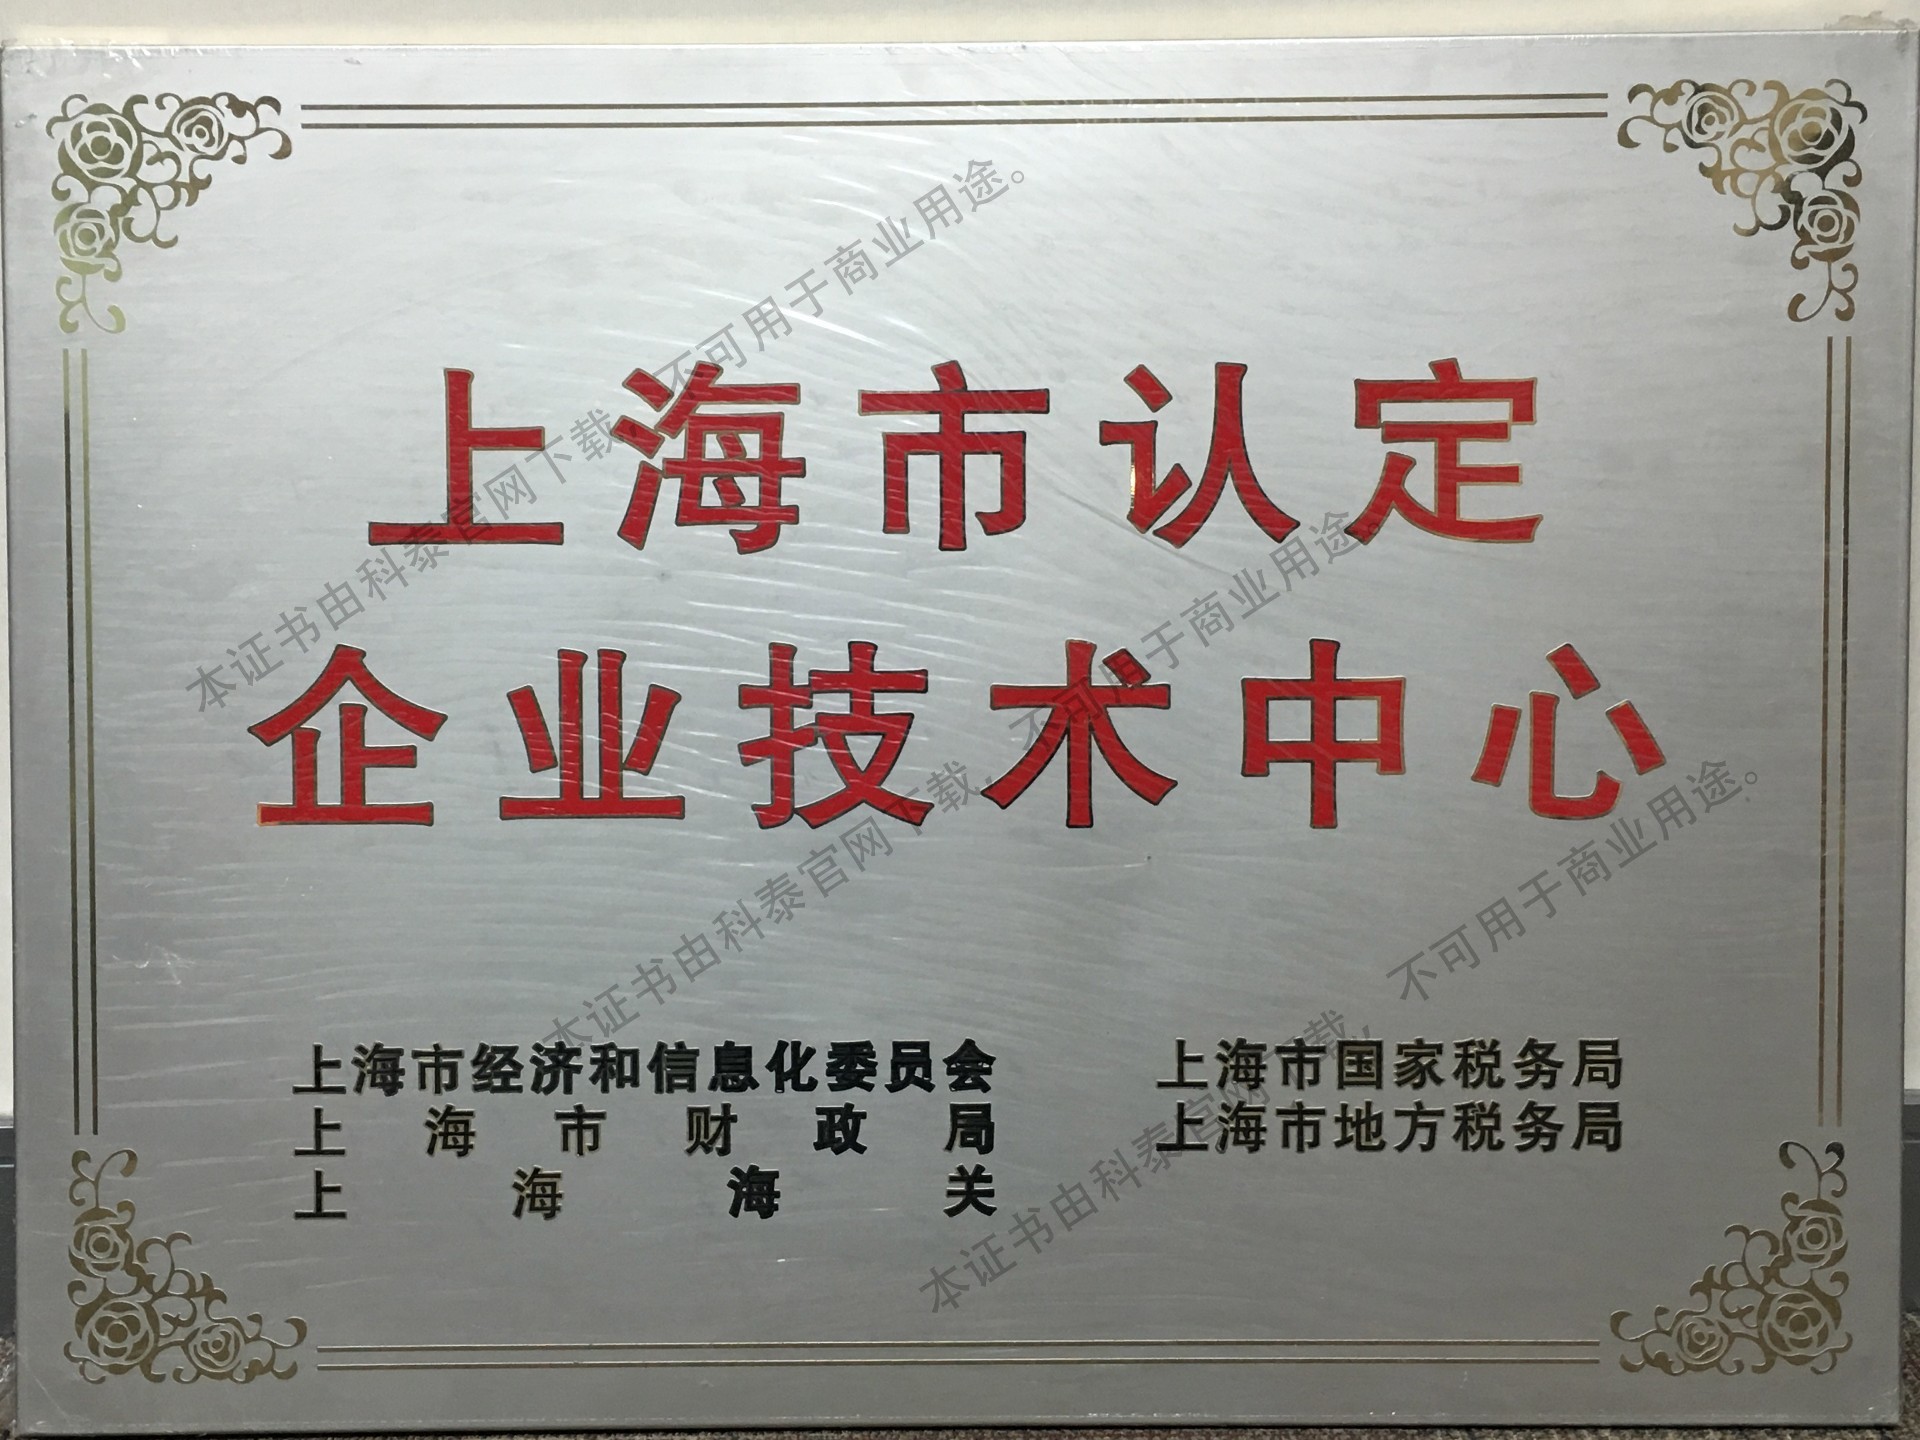 Certificate of Shanghai Certified Enterprise Technology Center